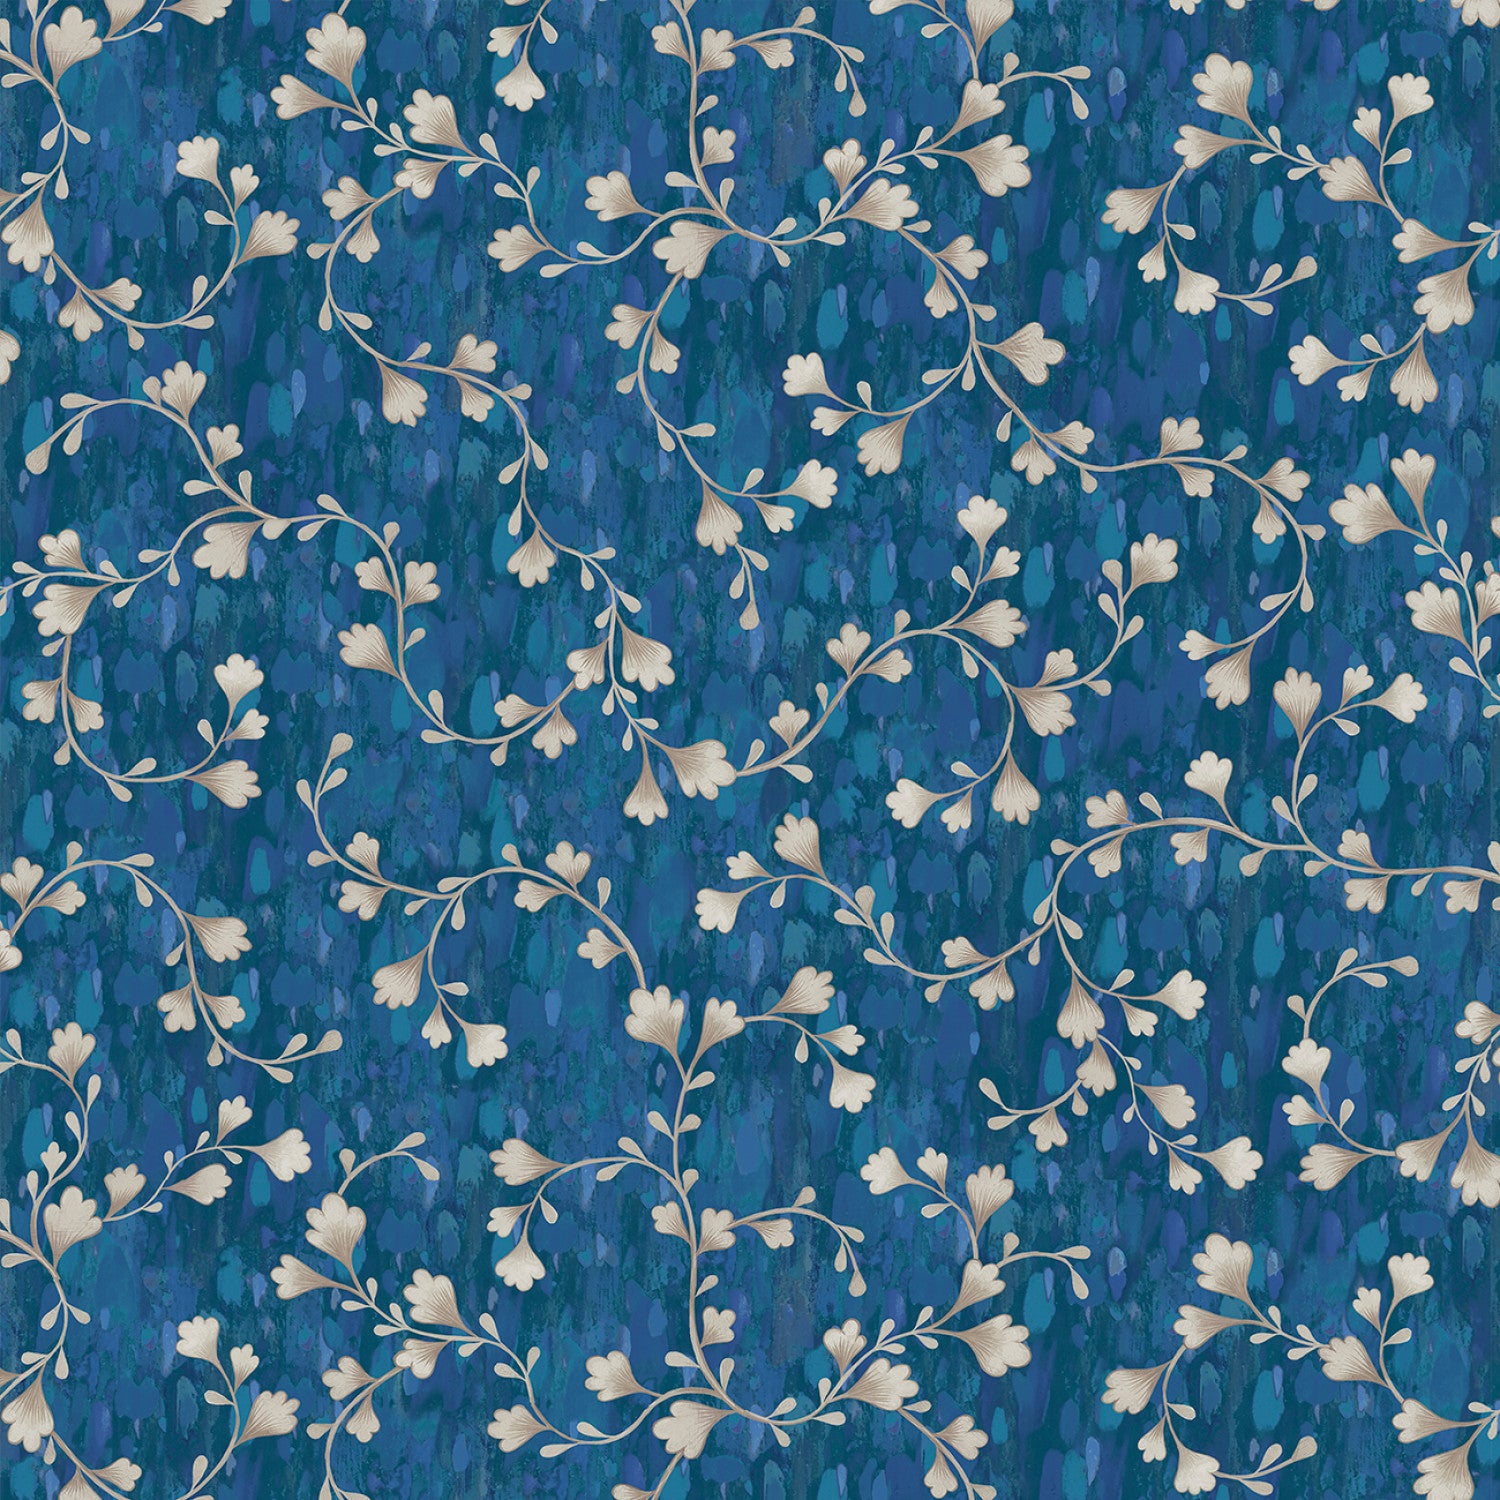 Vineyard 108" Quilt Backing | Blue/Silver | Jeremiah Ketner for P&B Textiles